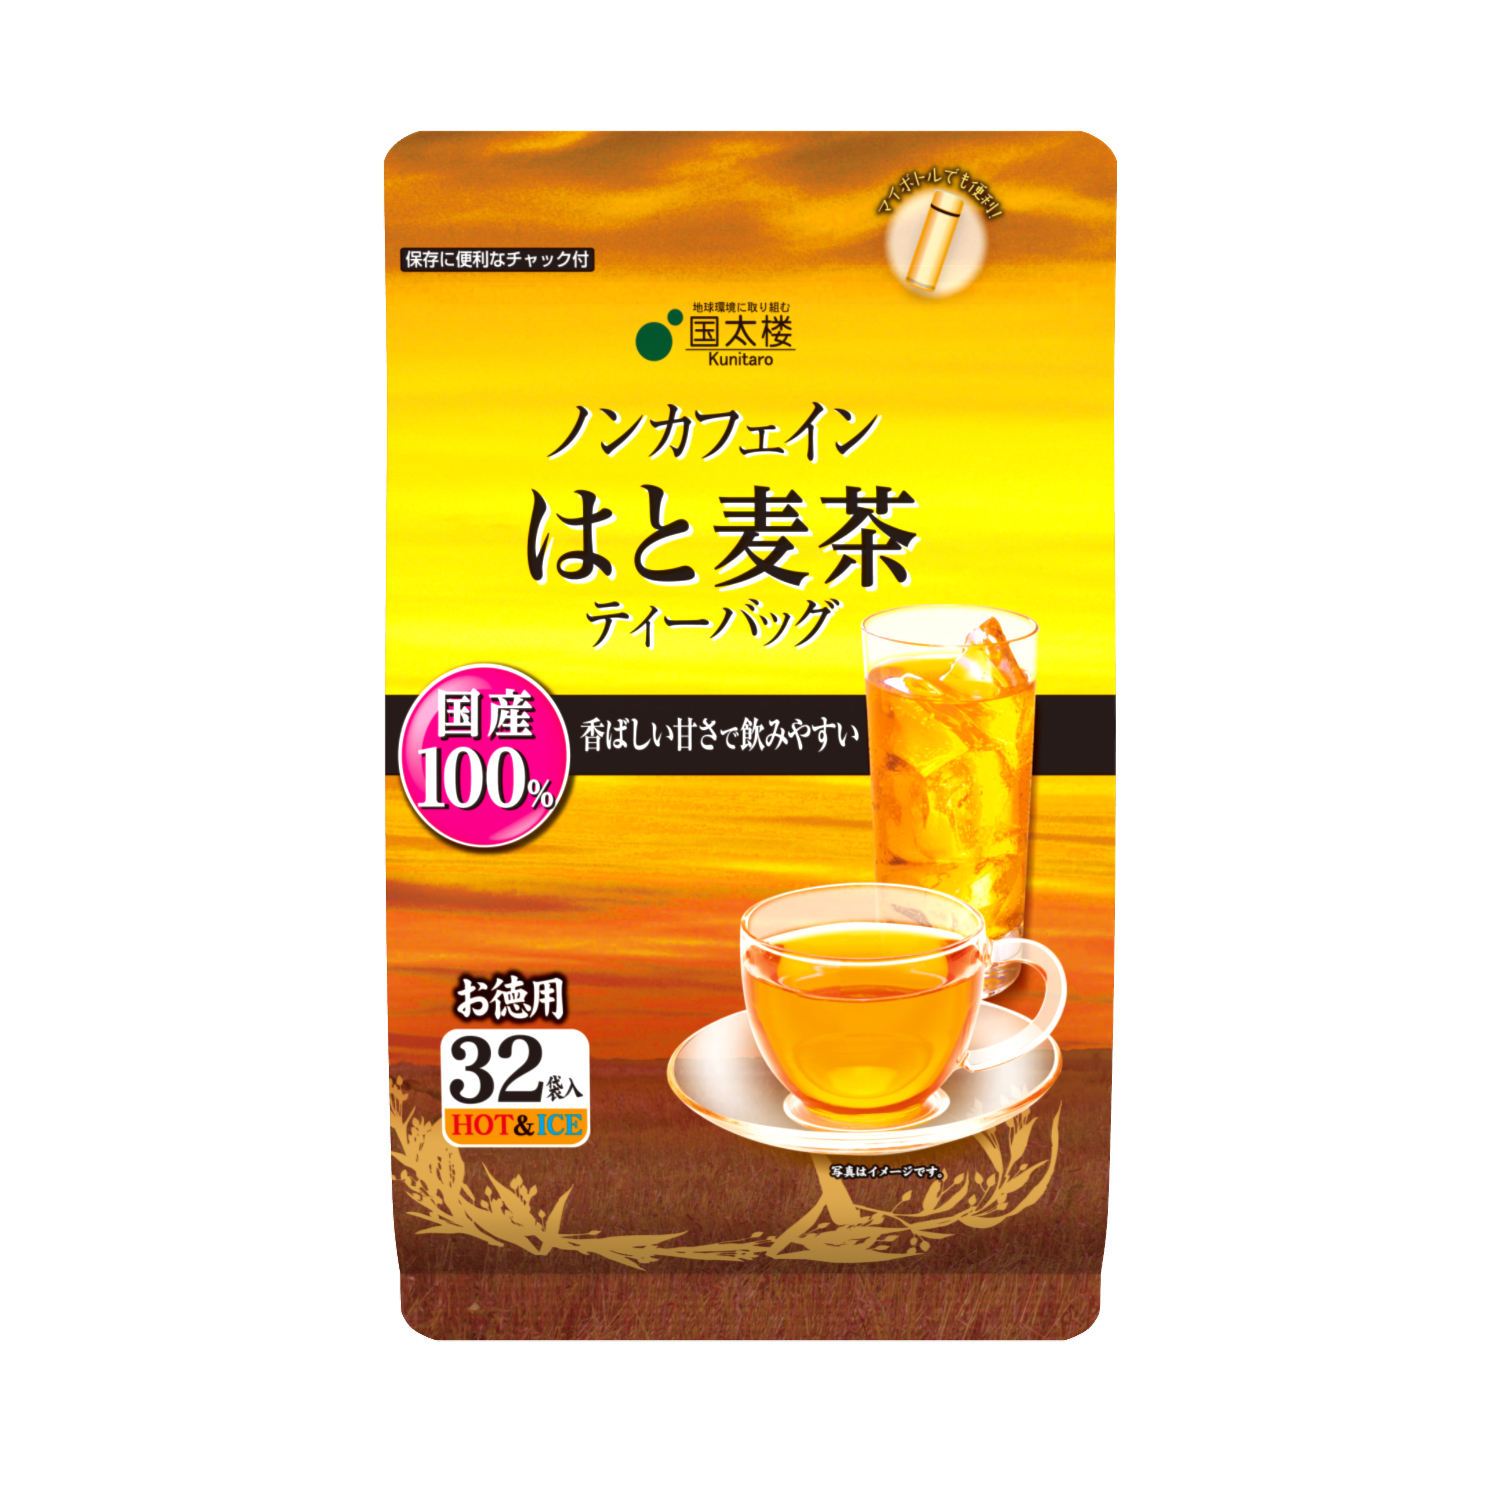 Hato Barley Tea 32 Bags Family Size Kunitaro Of Tea And Coffee